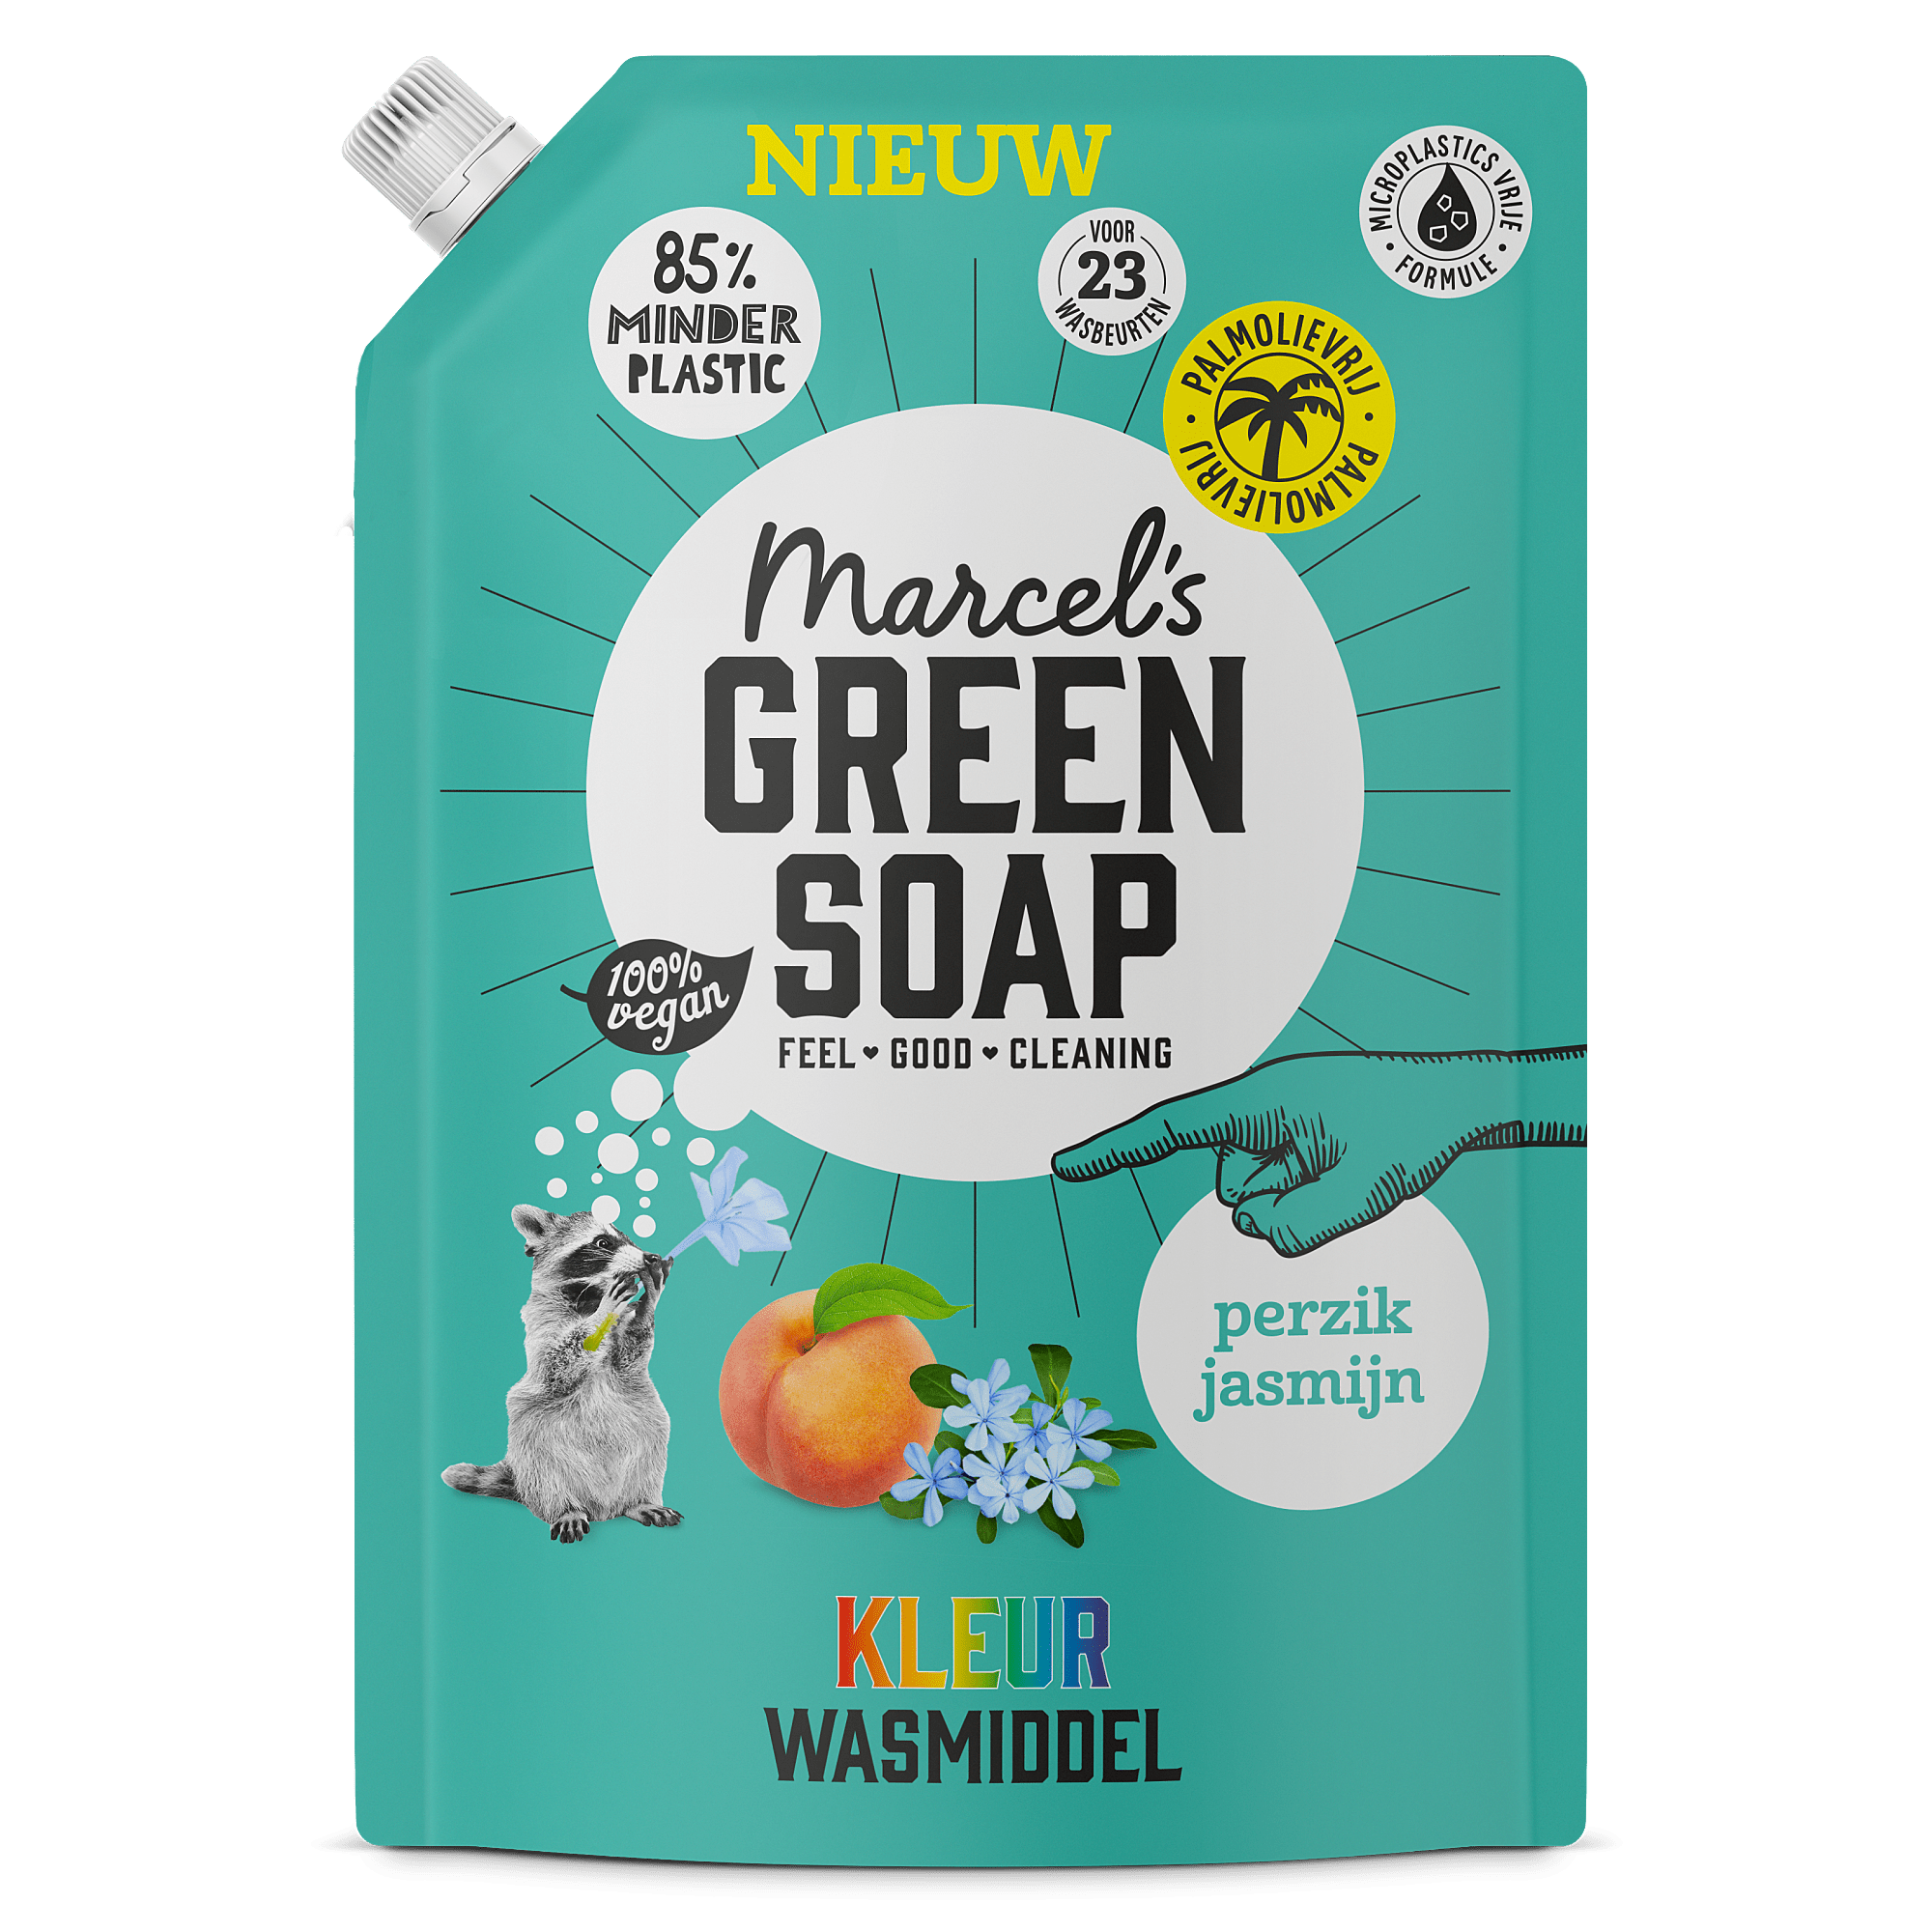 M.Green soap Lessive liquide couleur peach & jasmine recharge 1000ml